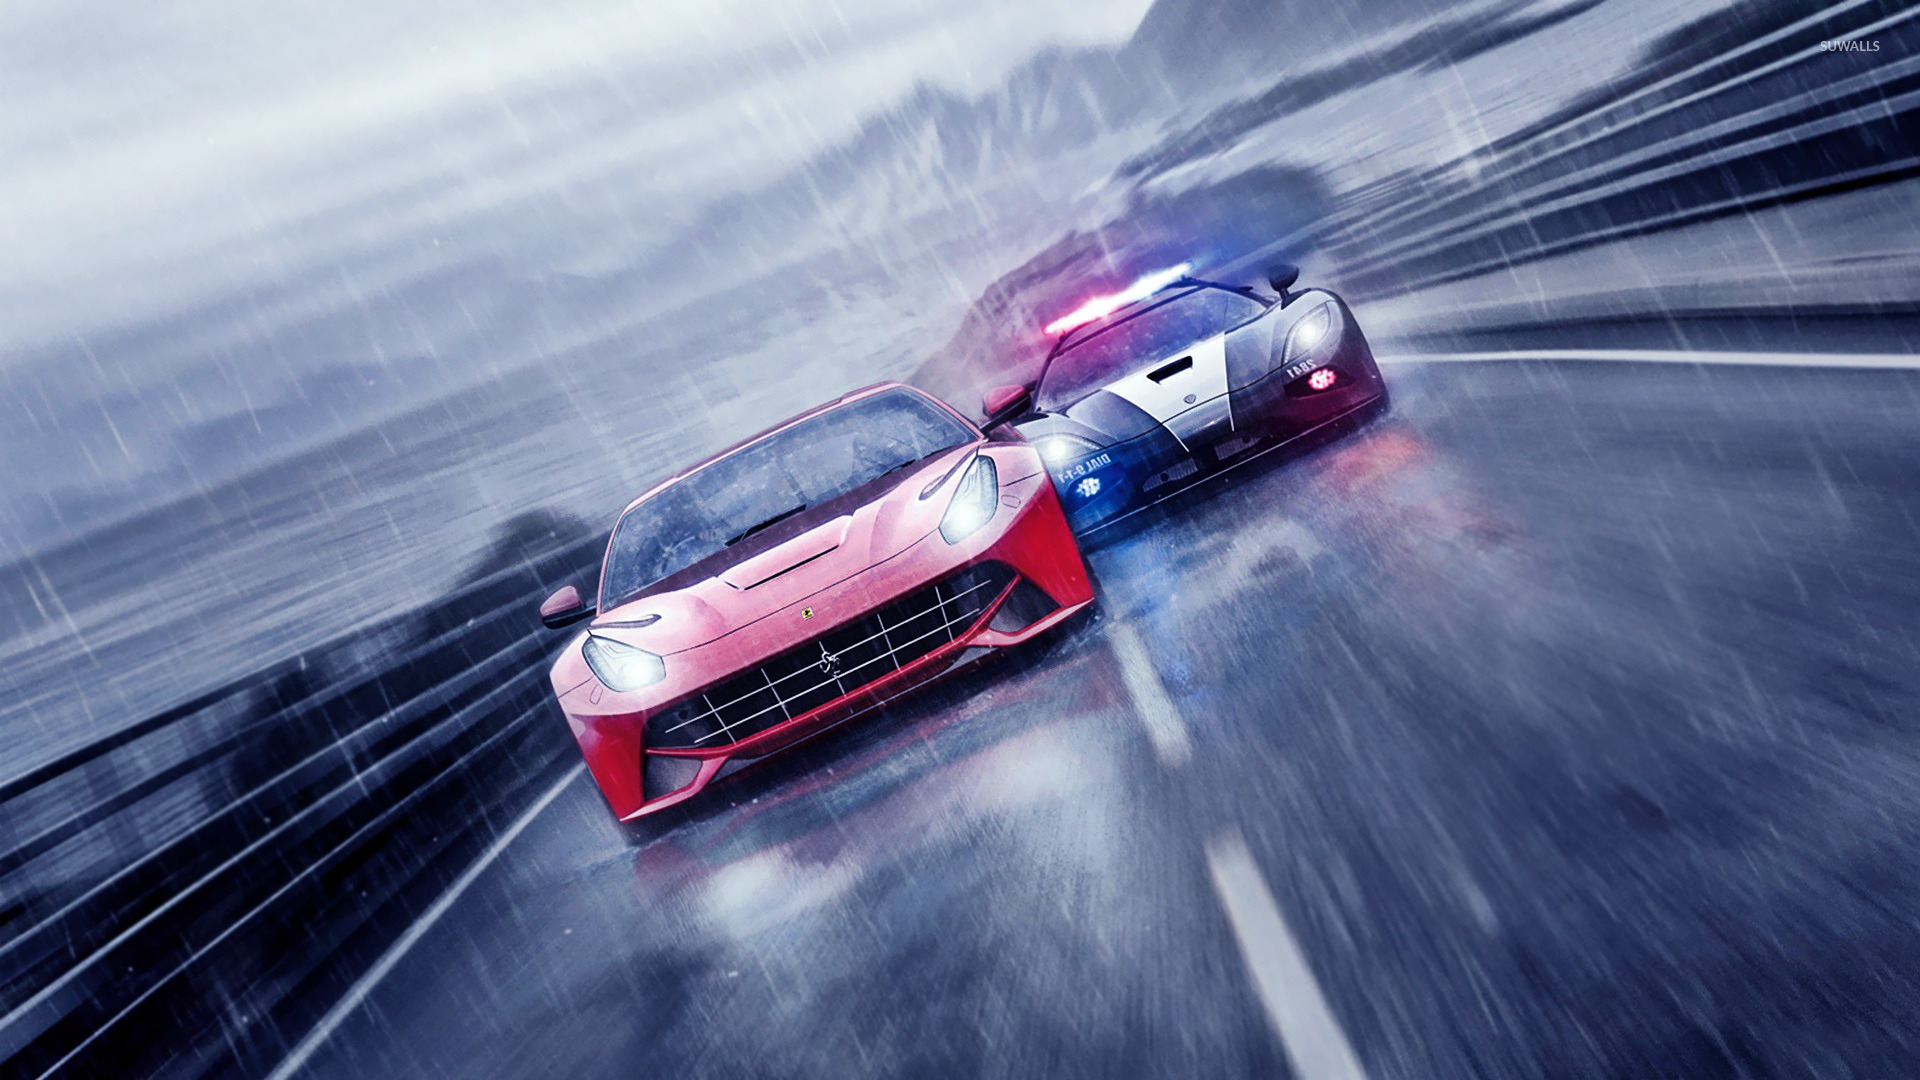 44+] Need for Speed Rivals Wallpaper - WallpaperSafari